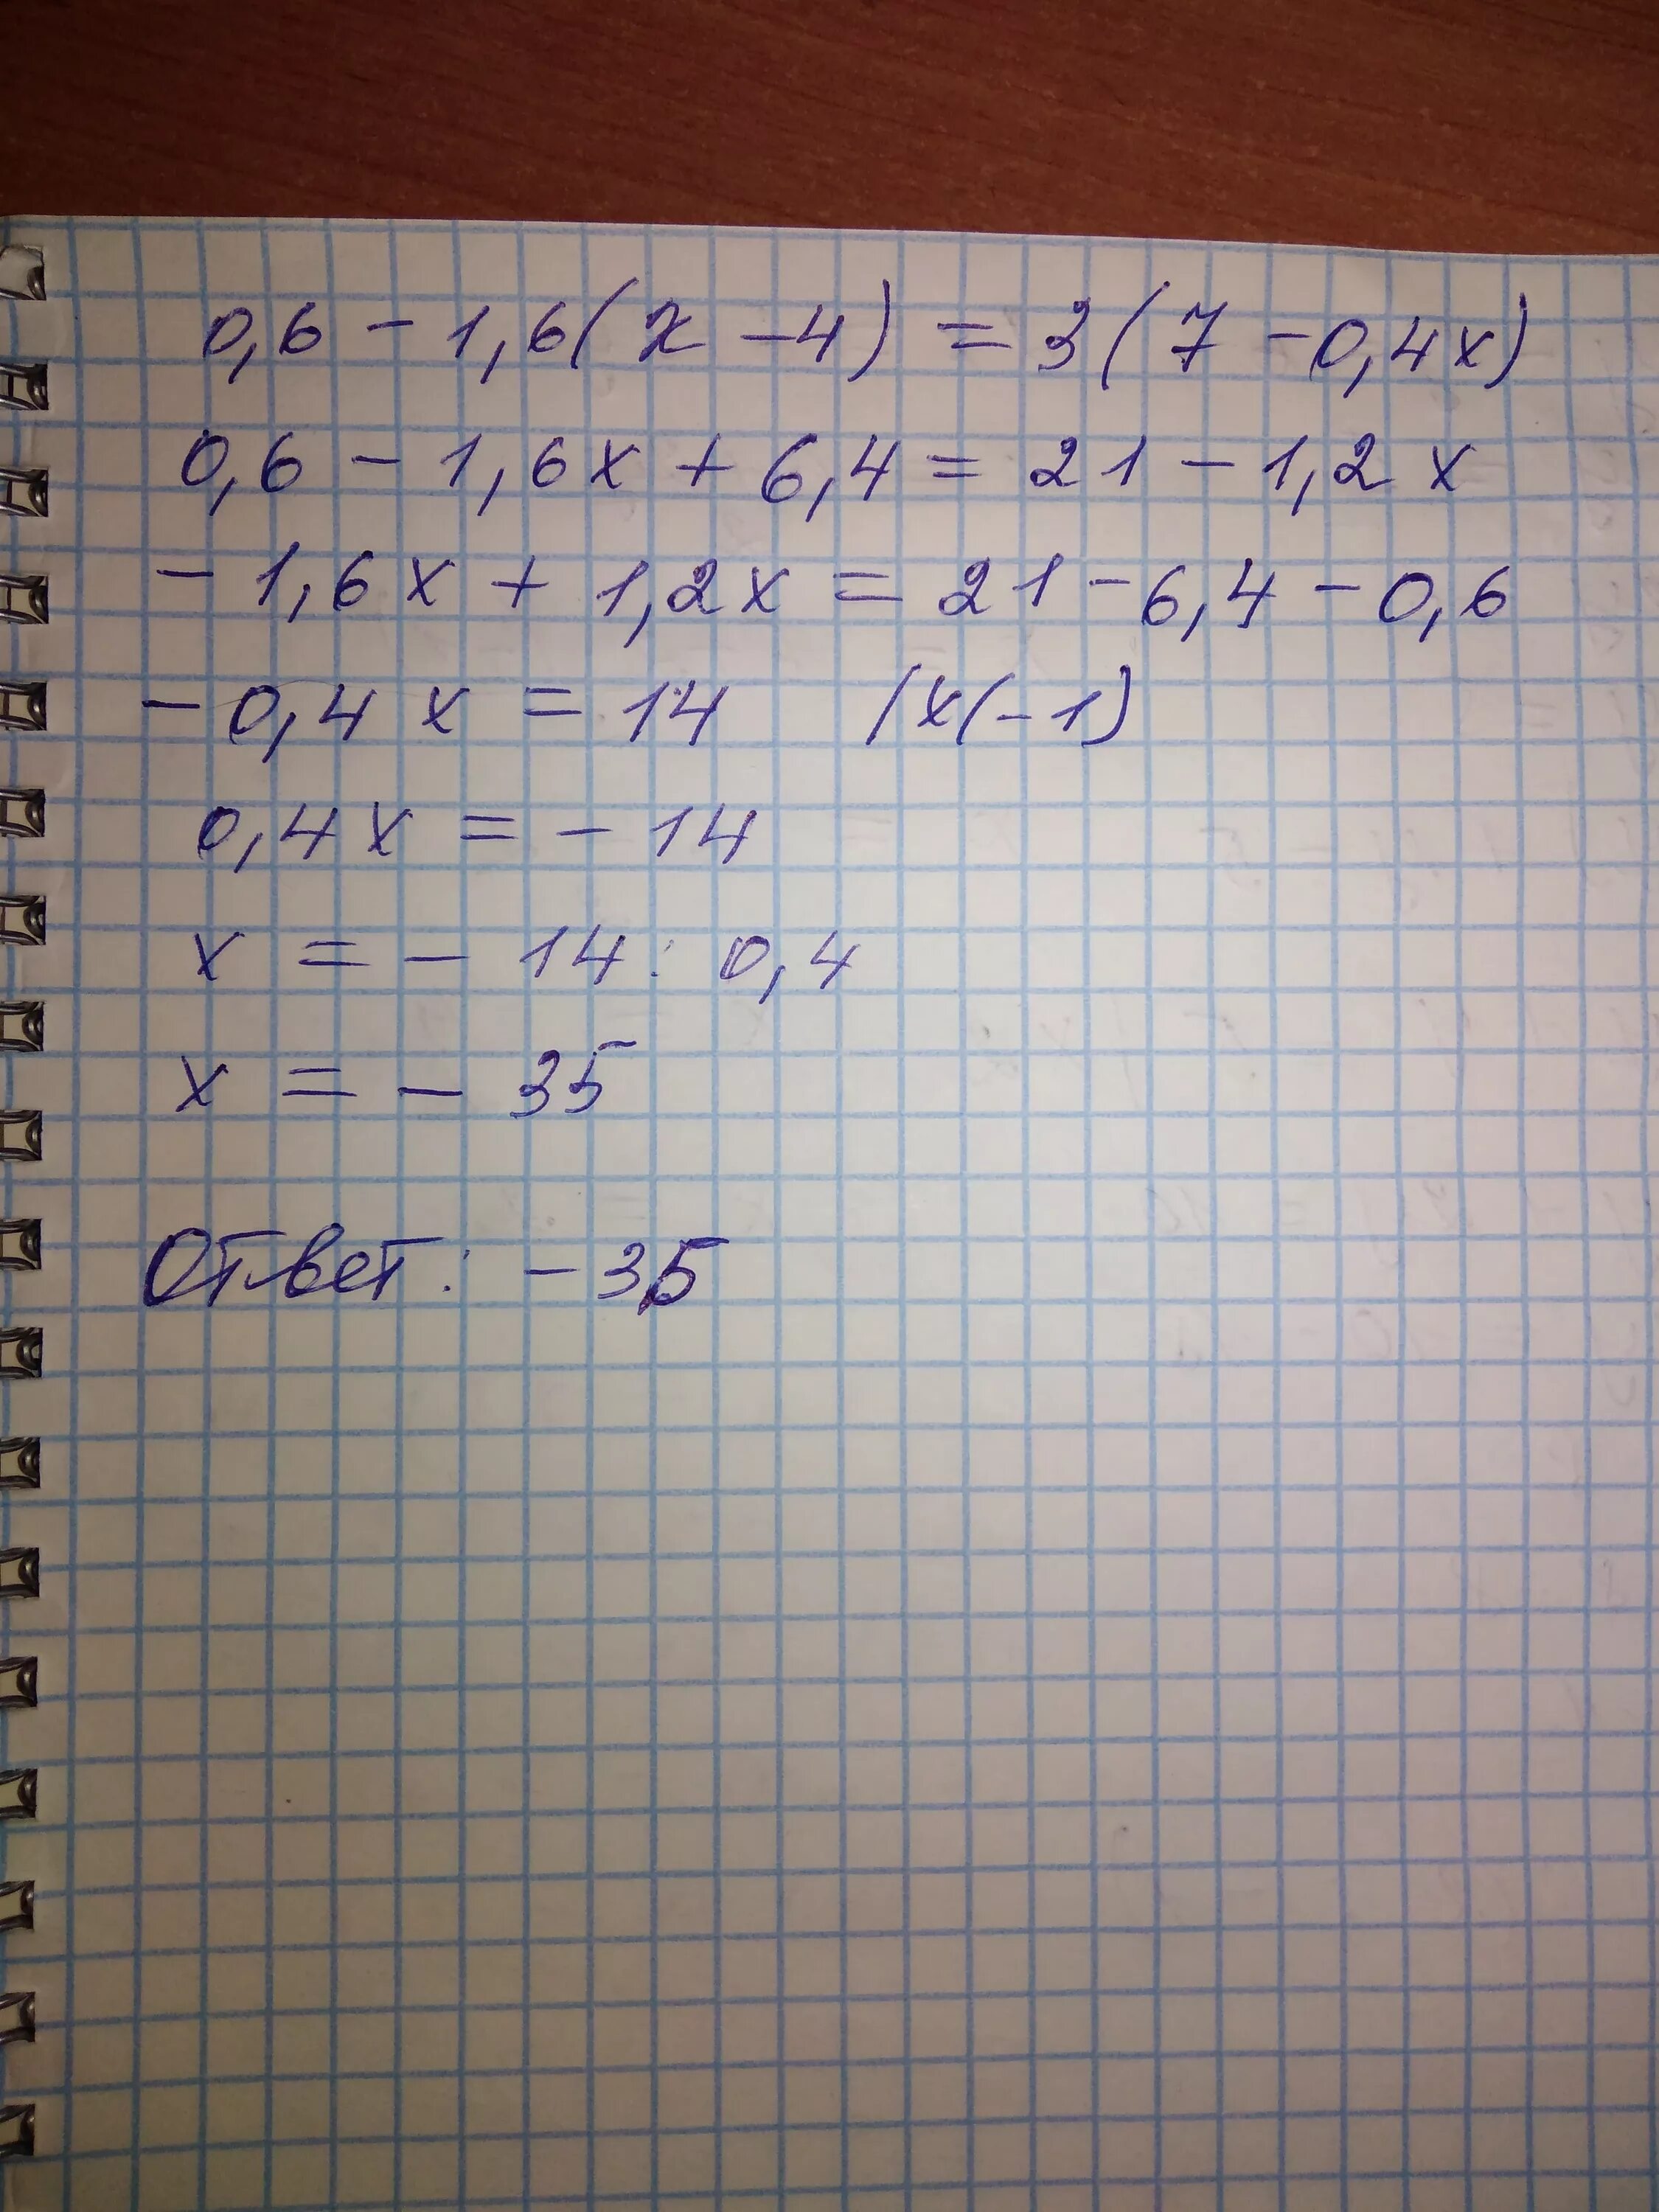 4 x 6 0.5. 6x4. X+6=X*4. X+6=X×4 решение. 3x(x - 4x + 6).